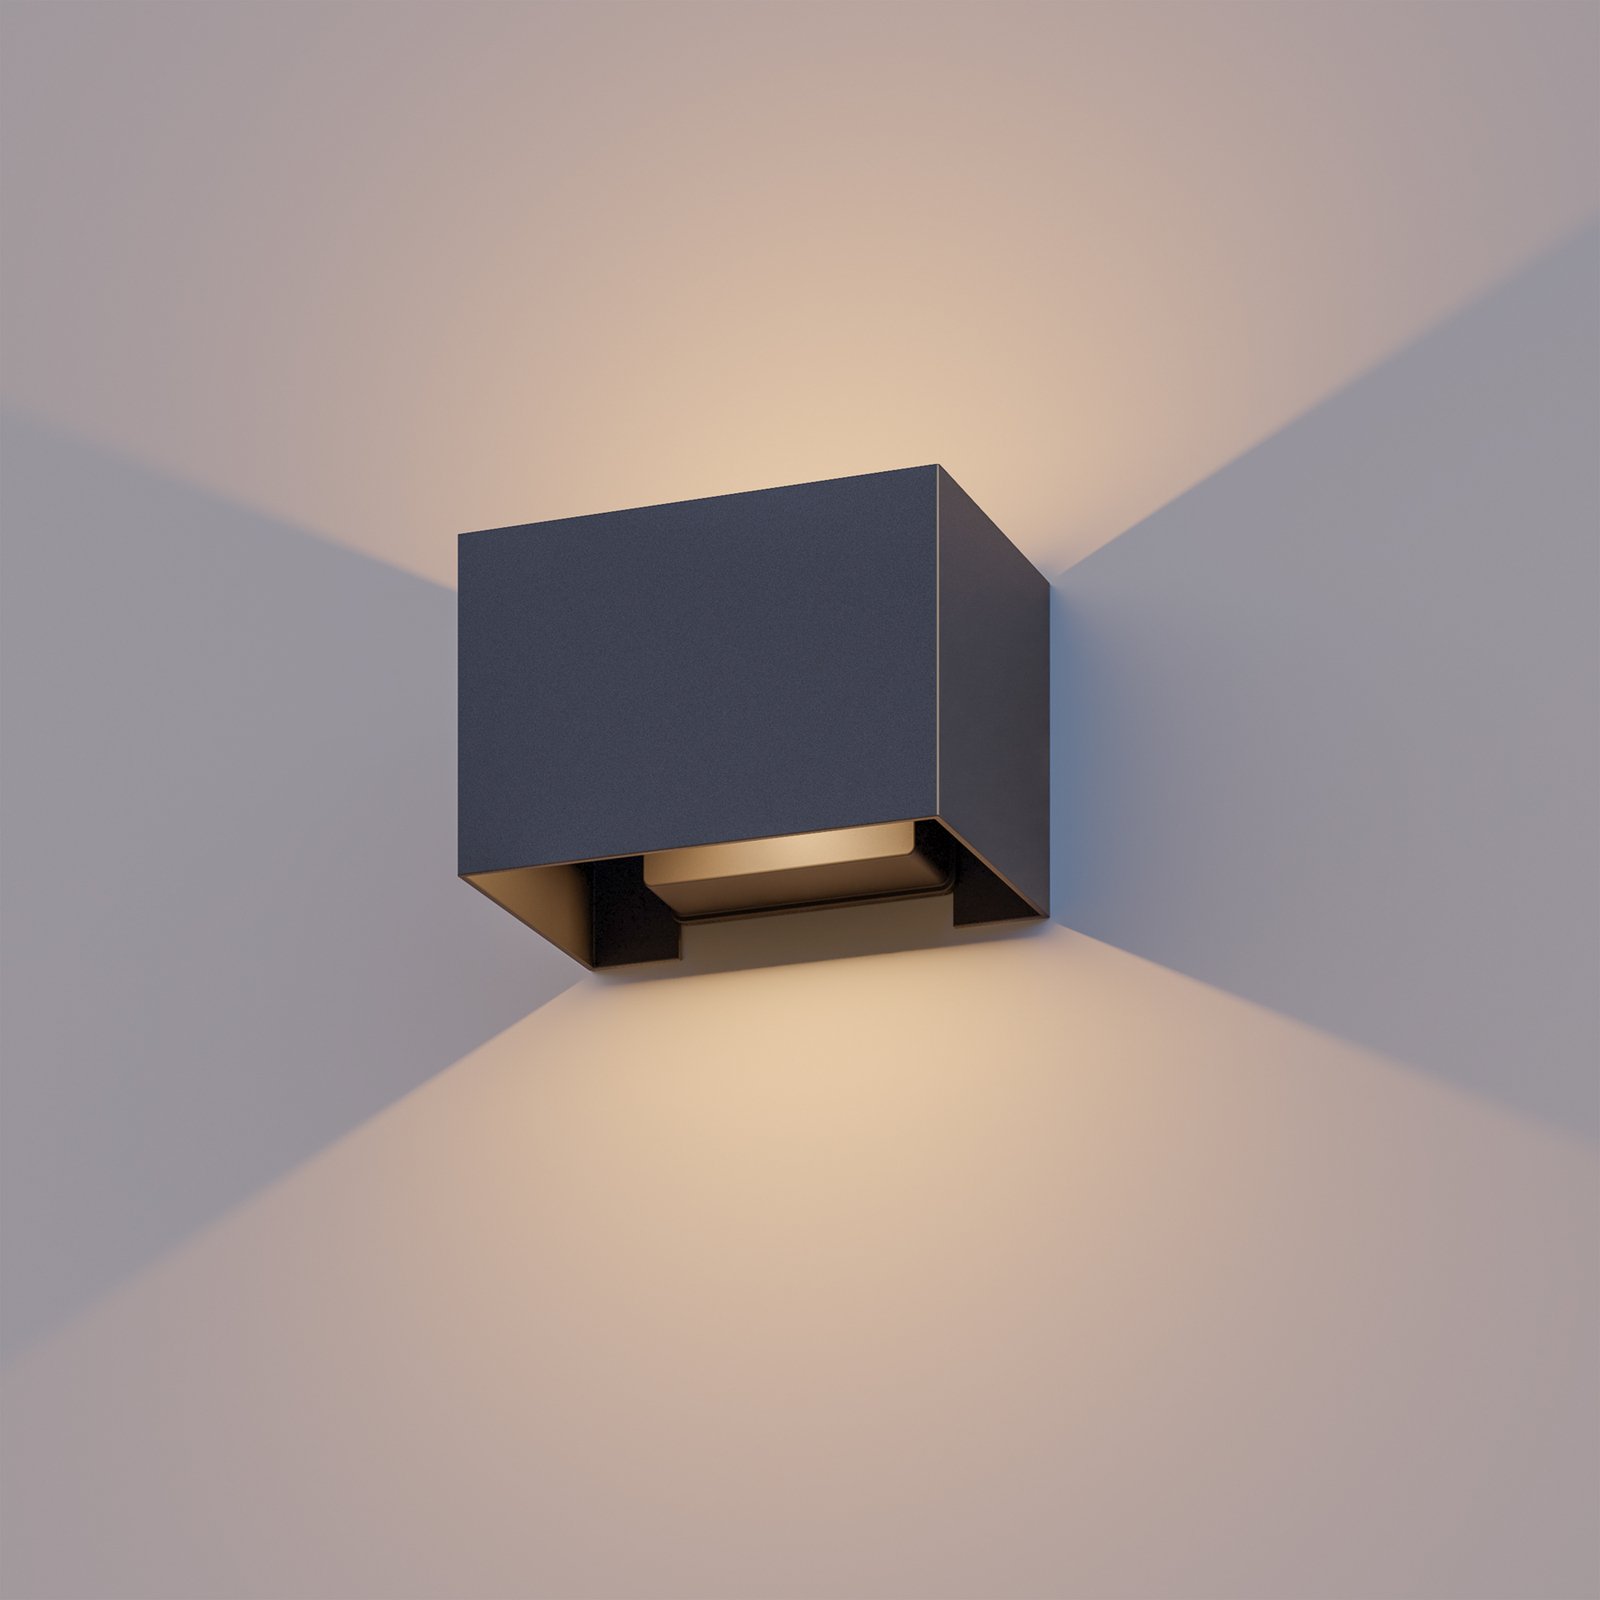 Calex outdoor wall light Rectangle up/down, height 10cm, black